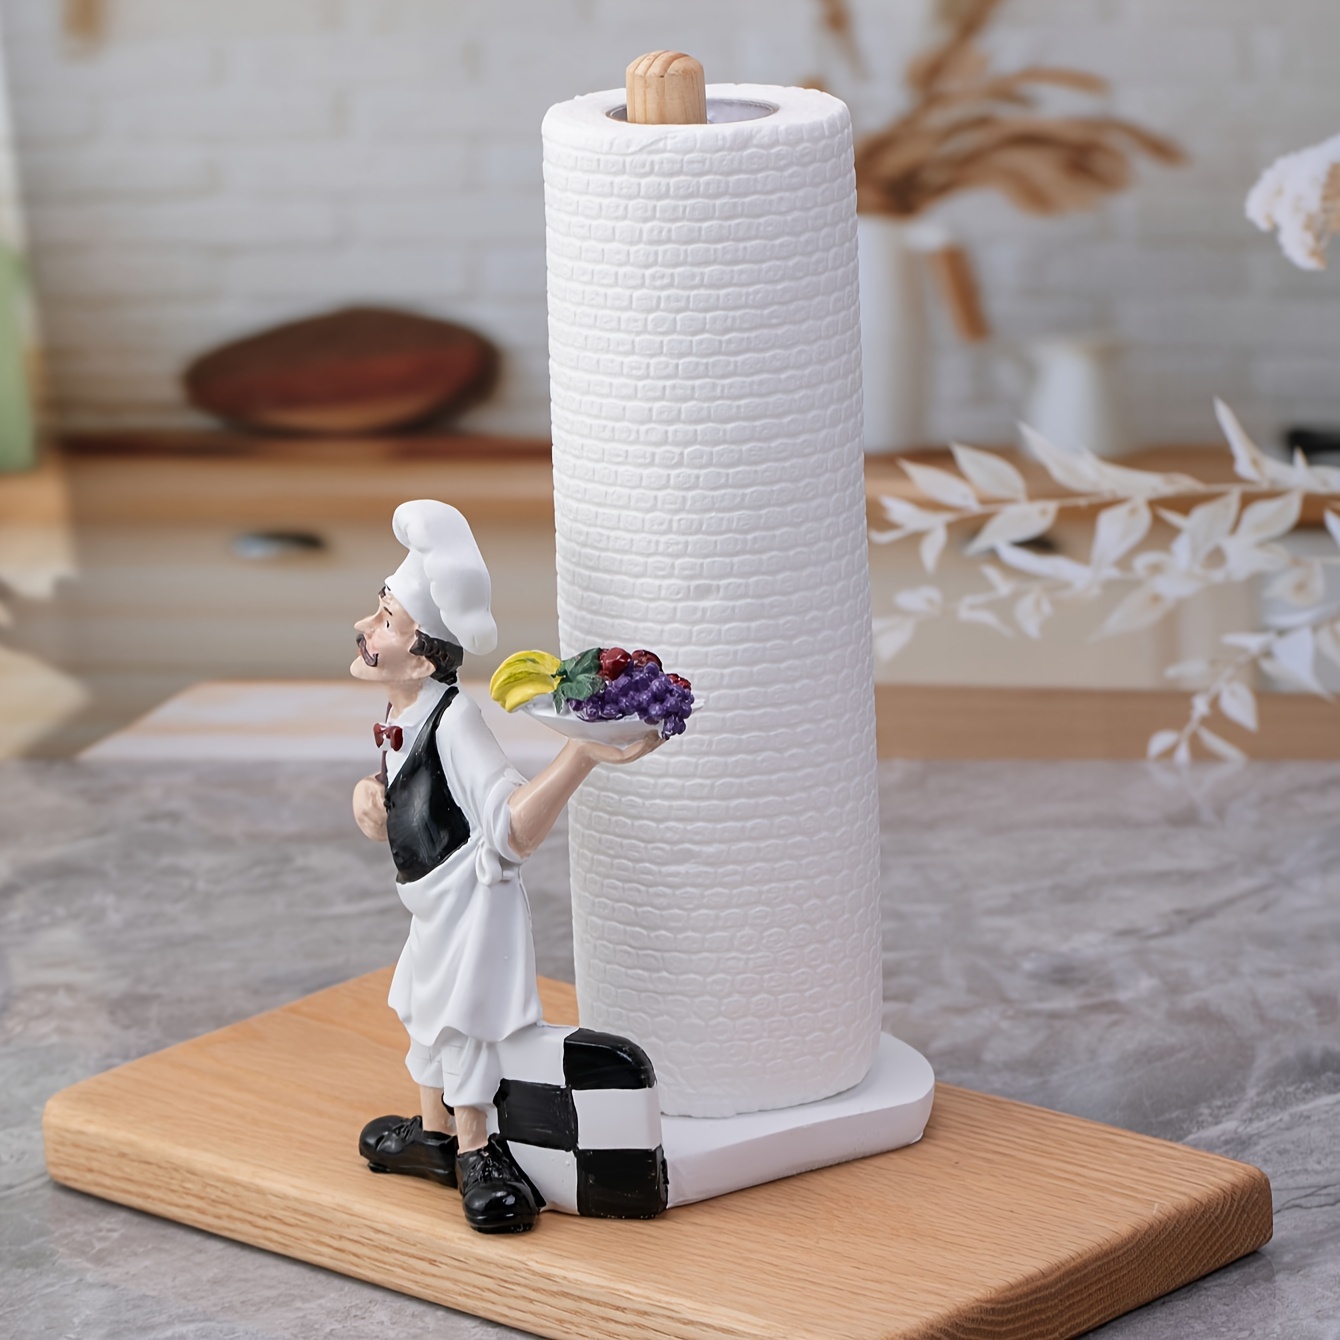 Chef Craft Paper Towel Holder